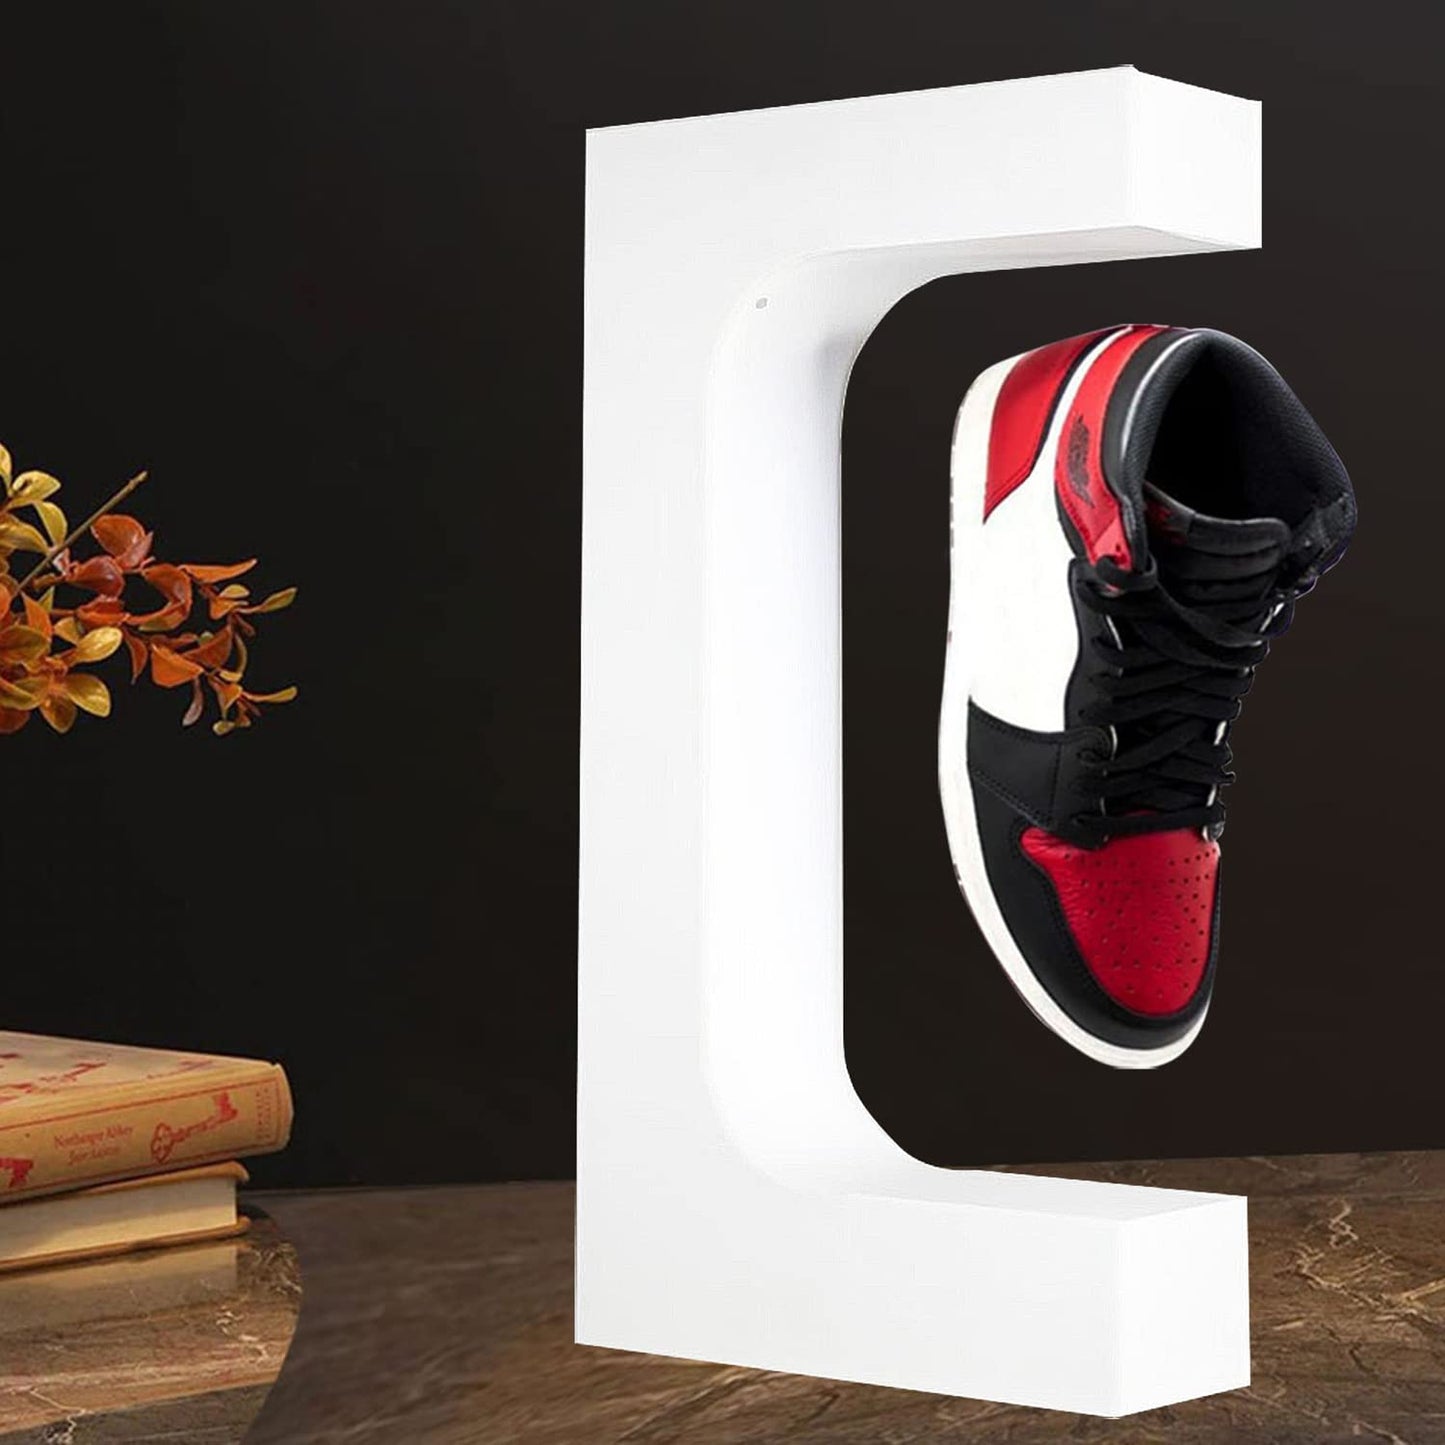 Floating Shoe Display Rotating Levitating Shoe Display LED Light Levitation Sneaker Rack - Homeware Discounts